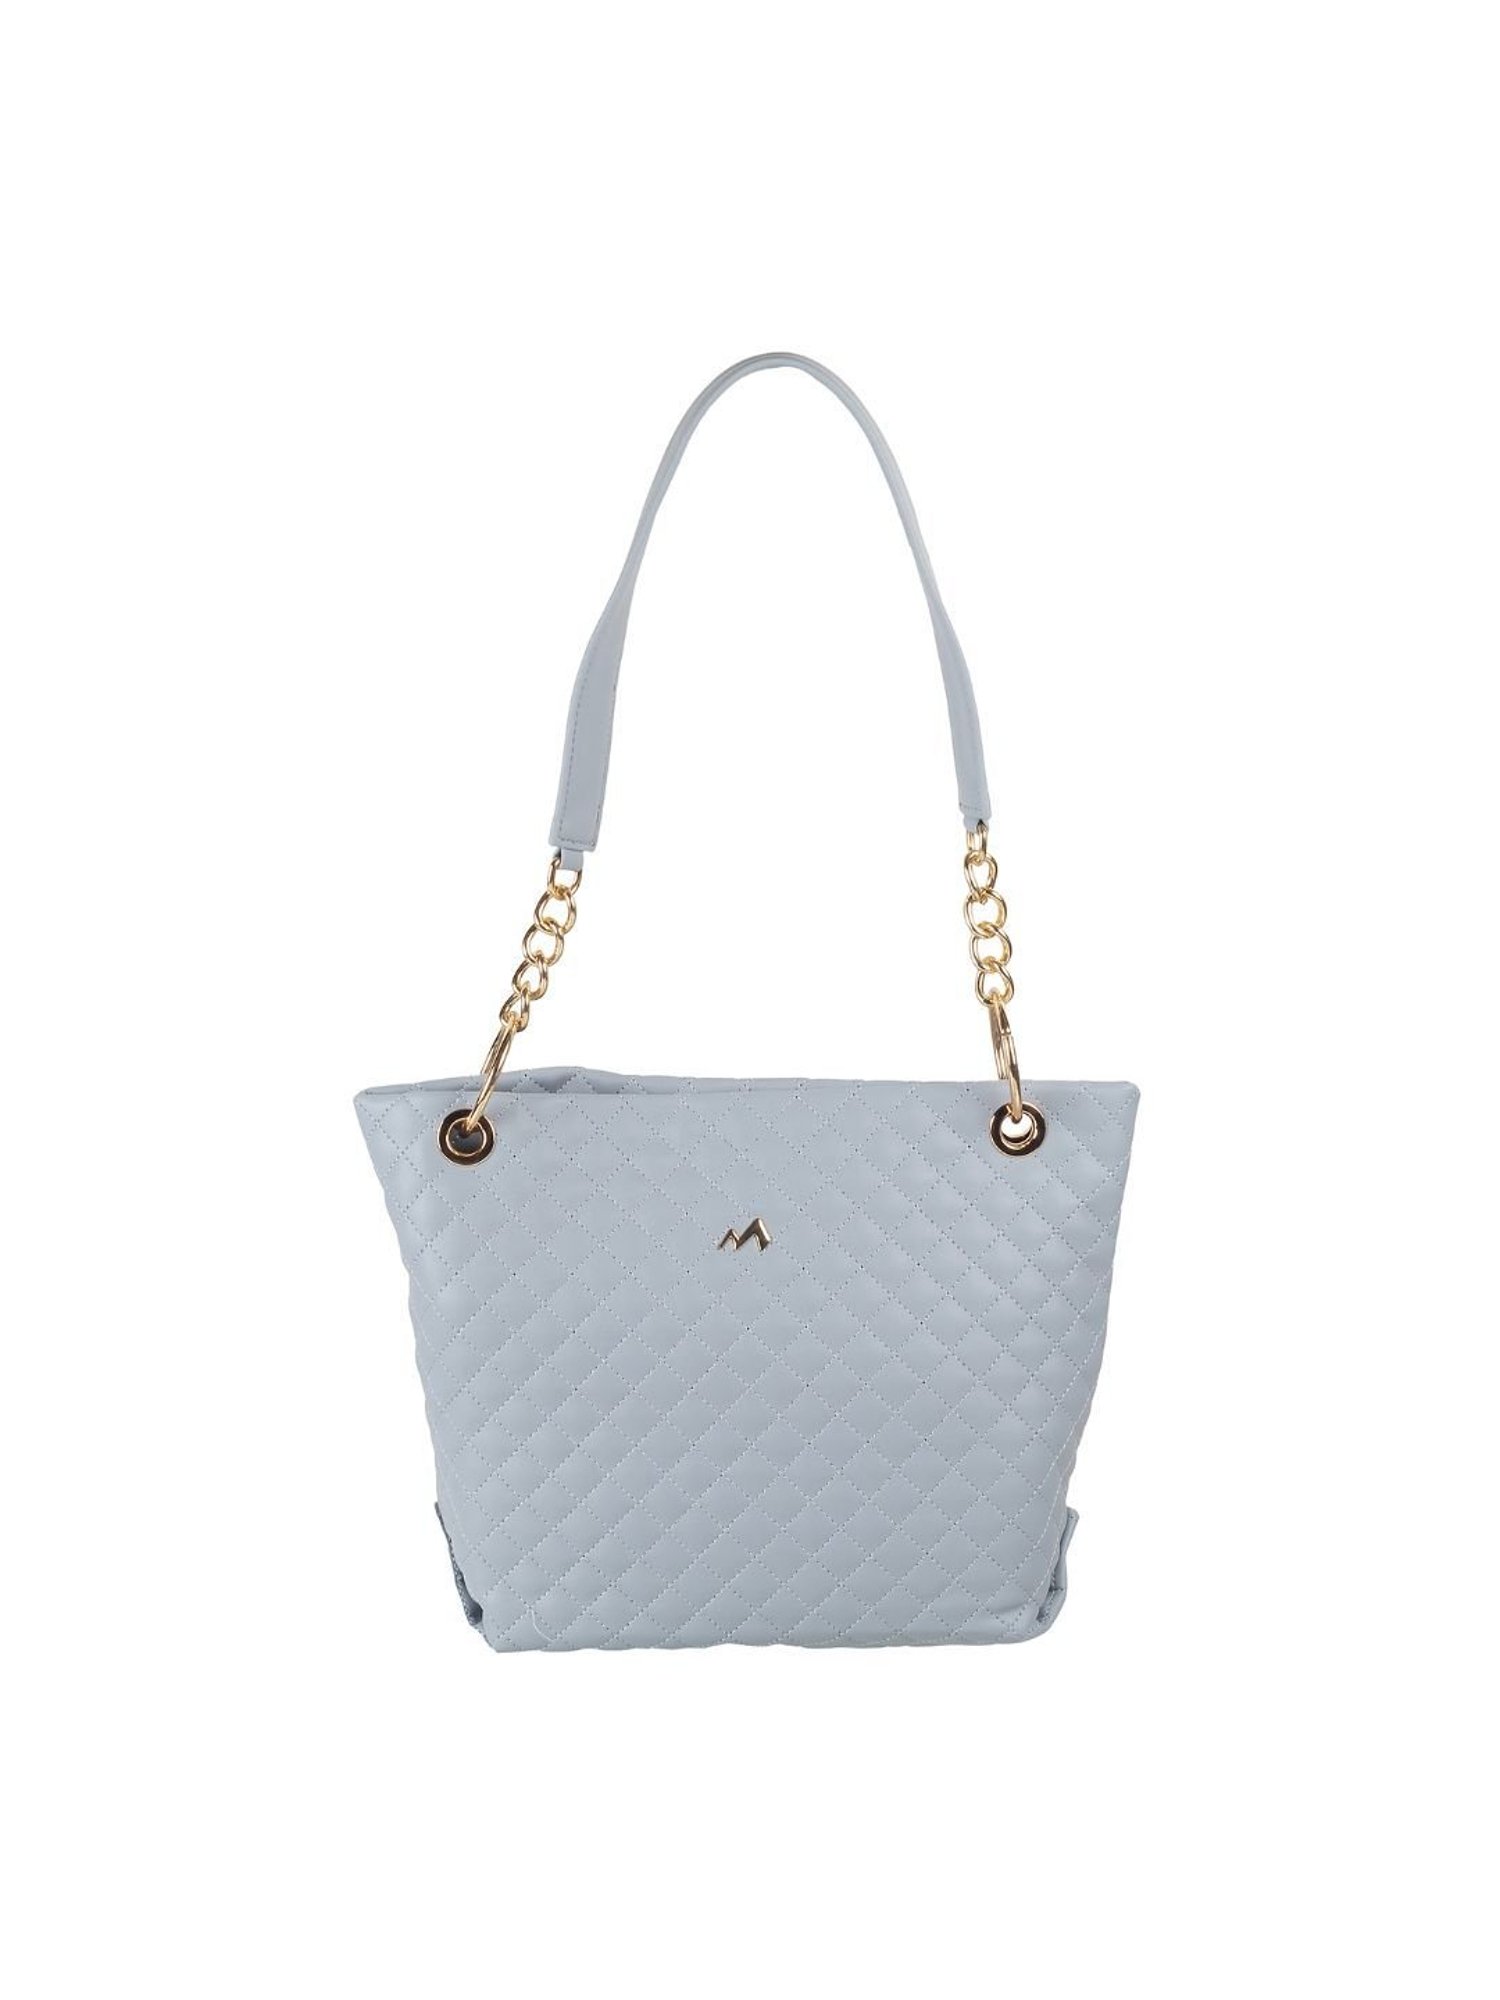 Royal blue and white handbag | Bags, Handbag, White handbag